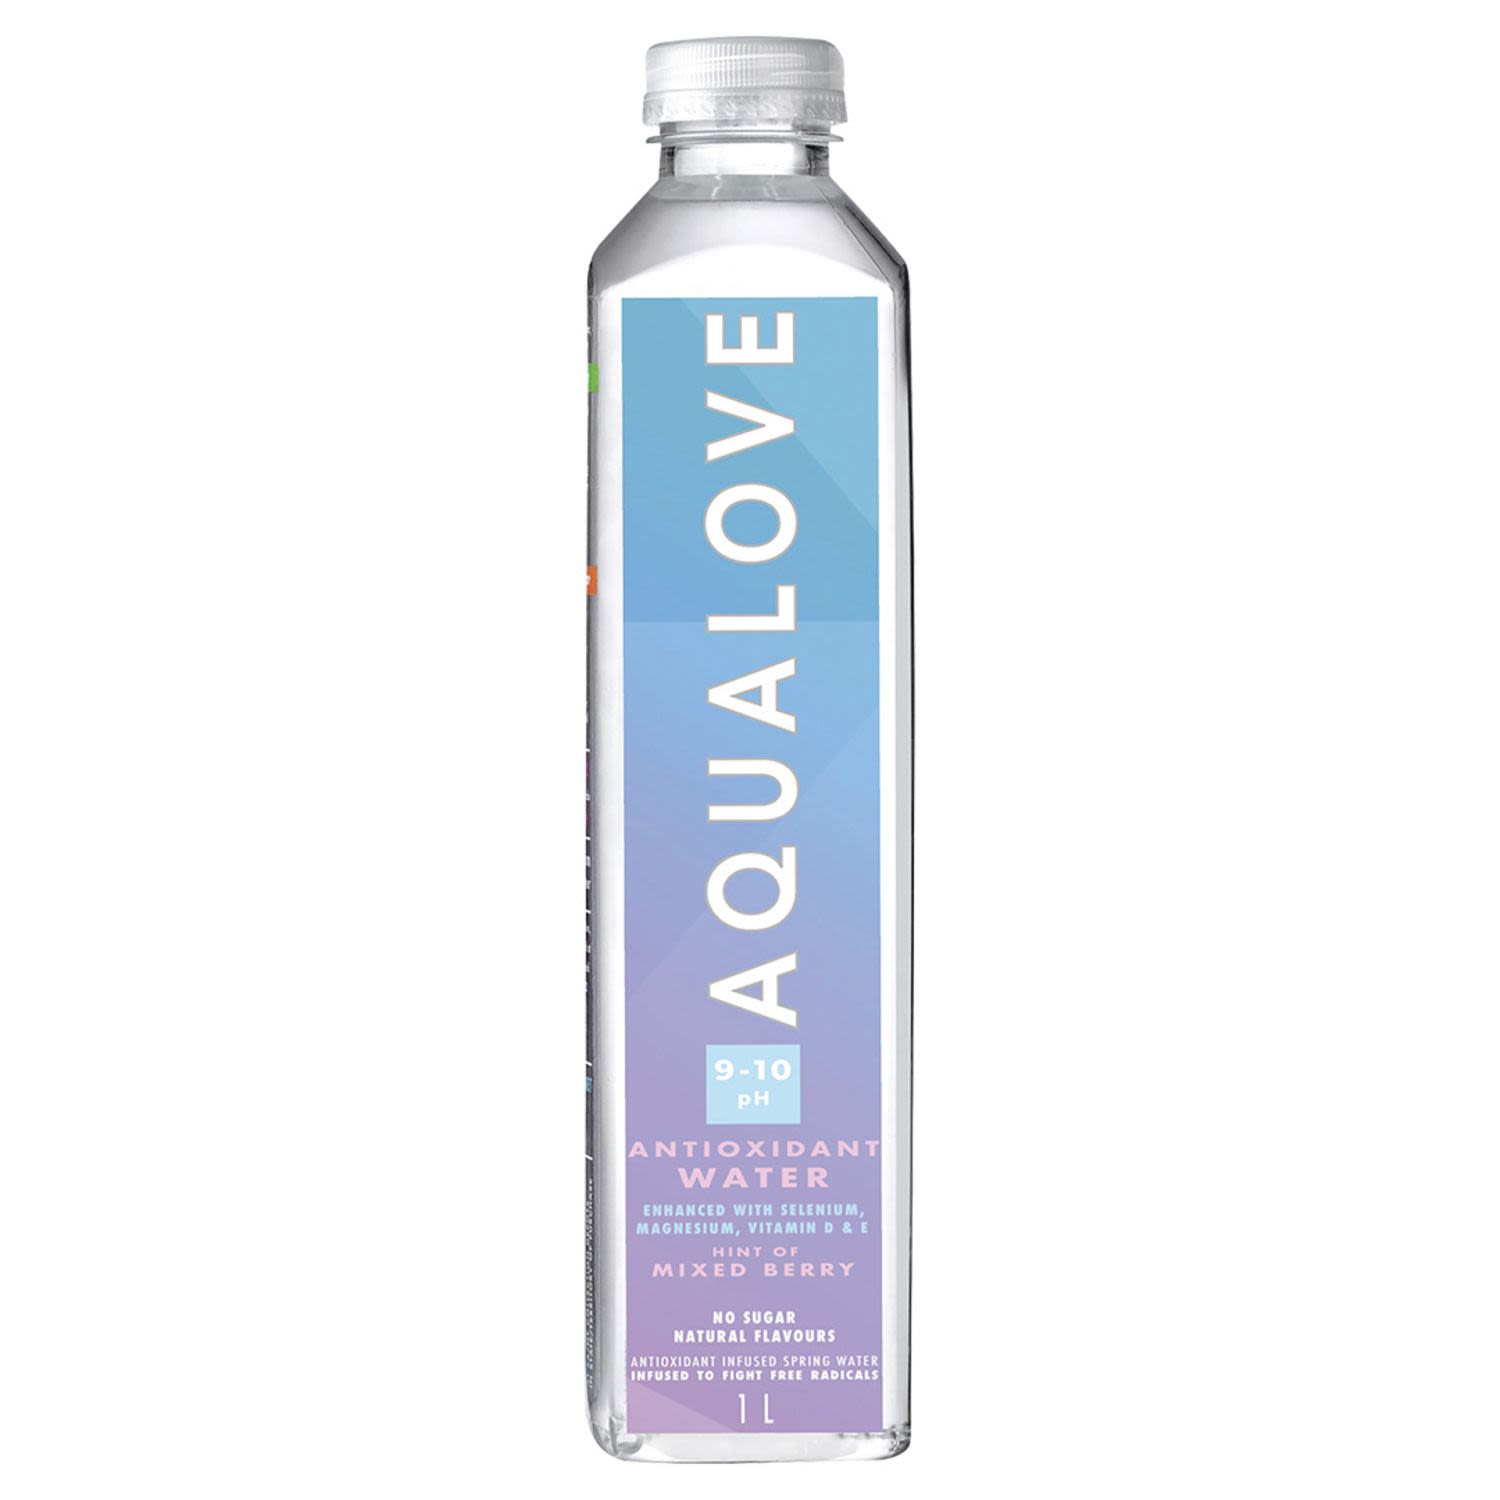 Aqualove Antioxidant Water, 1 Litre